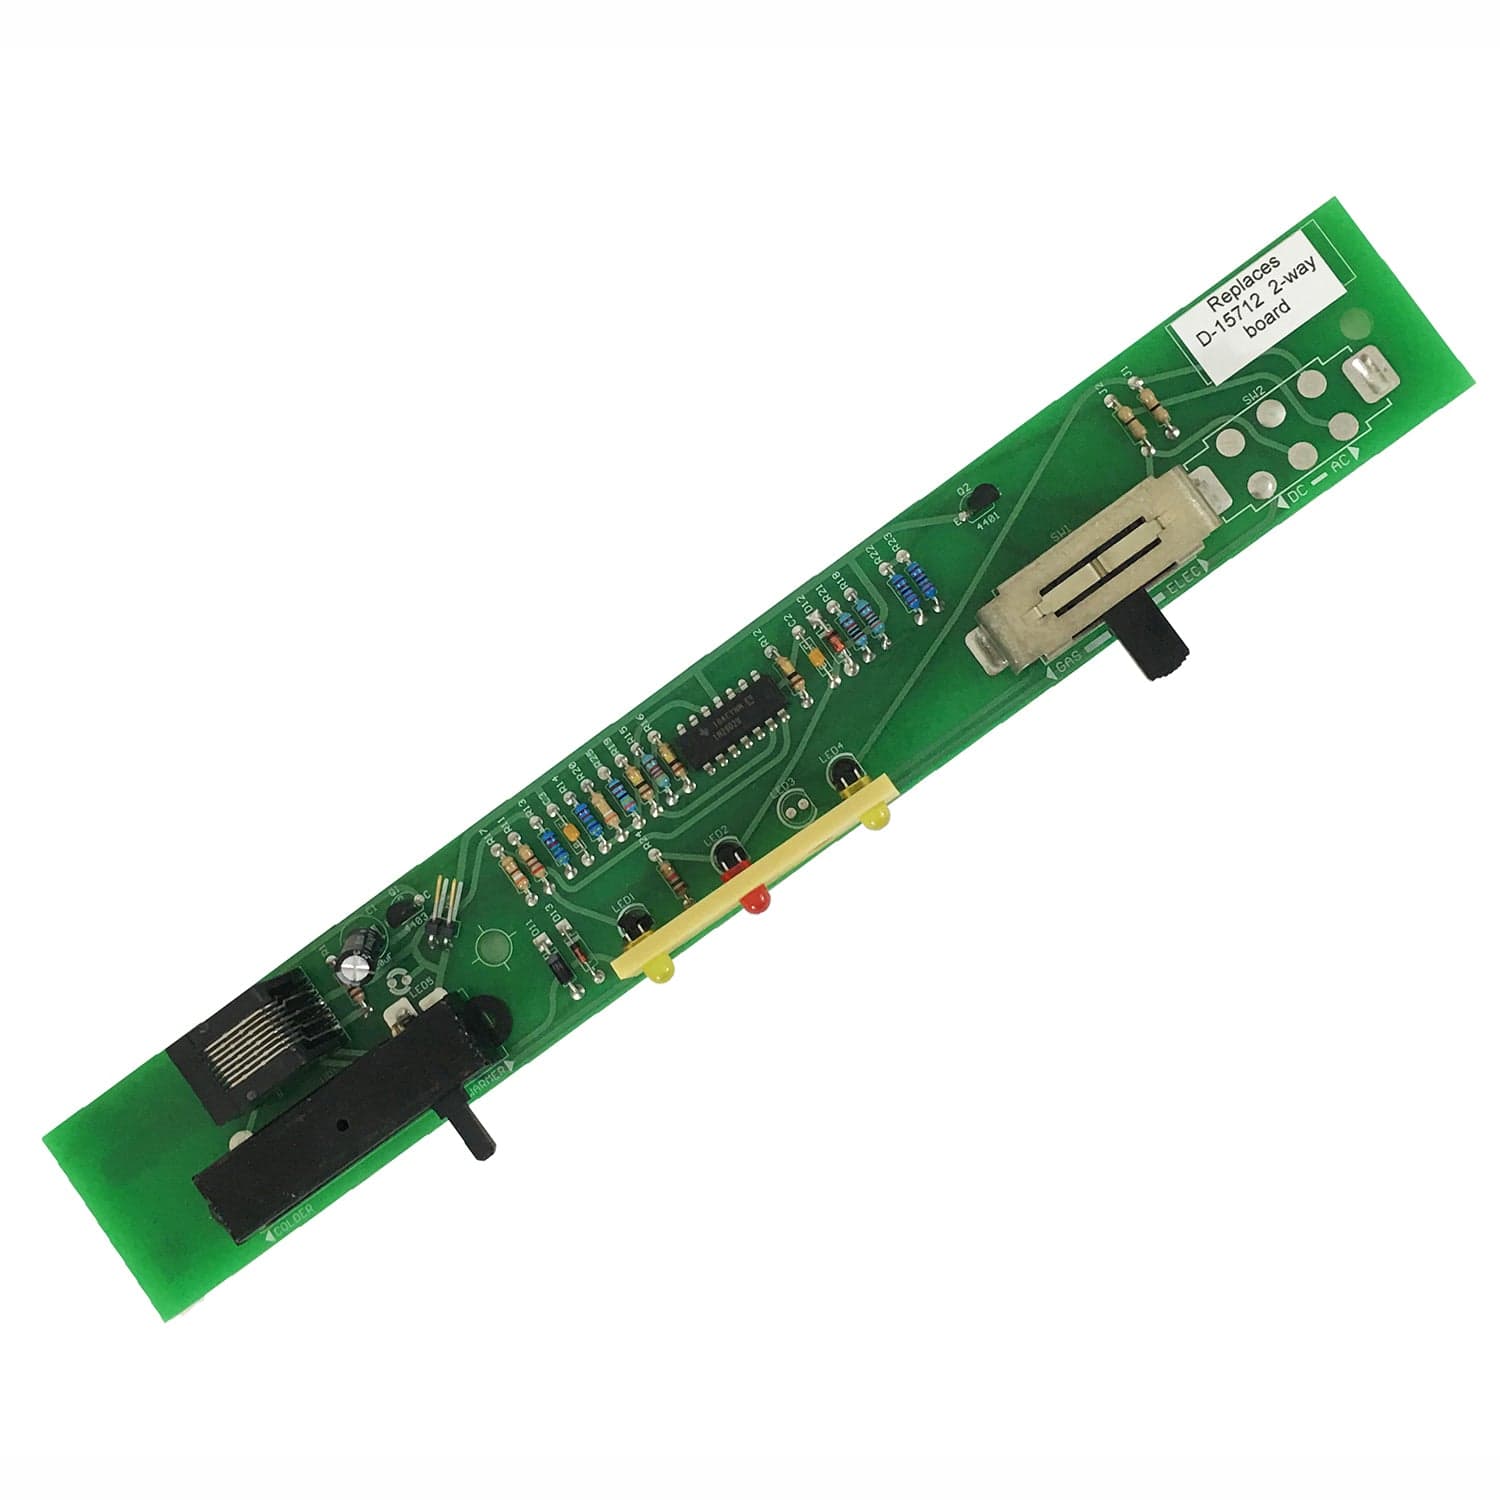 Dinosaur Electronics D-15712 2-WAY Eyebrow Circuit Board